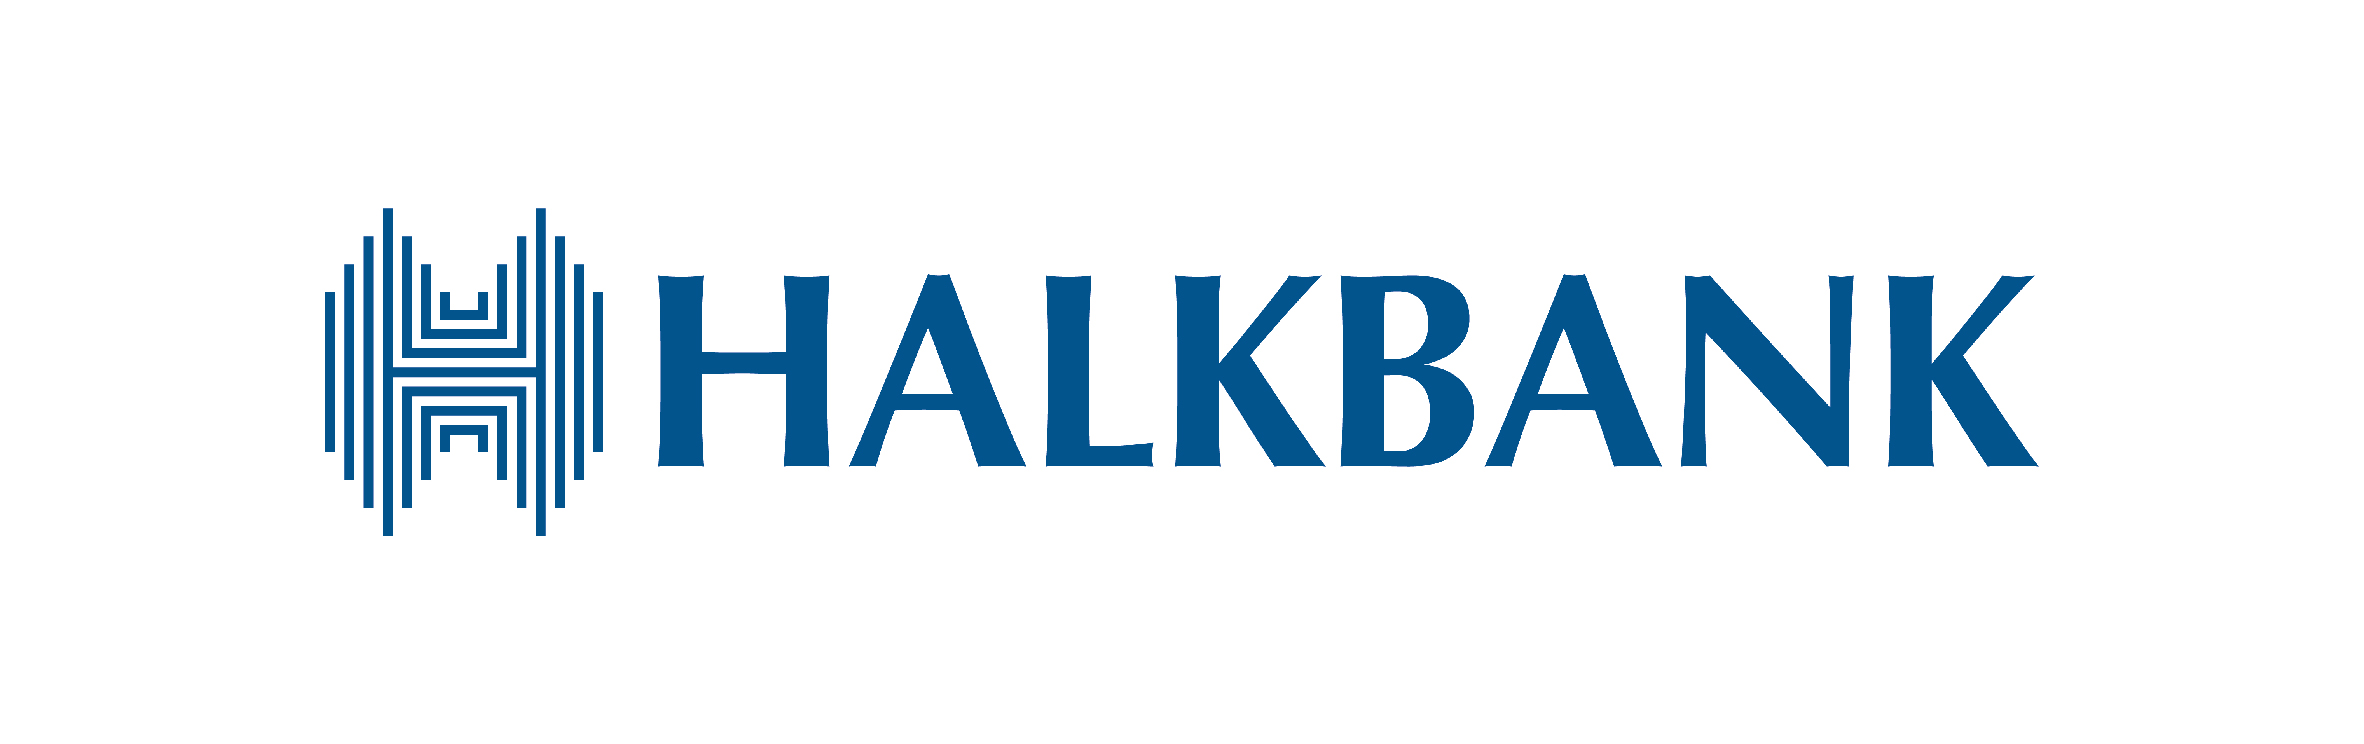 HalkBank - Tl